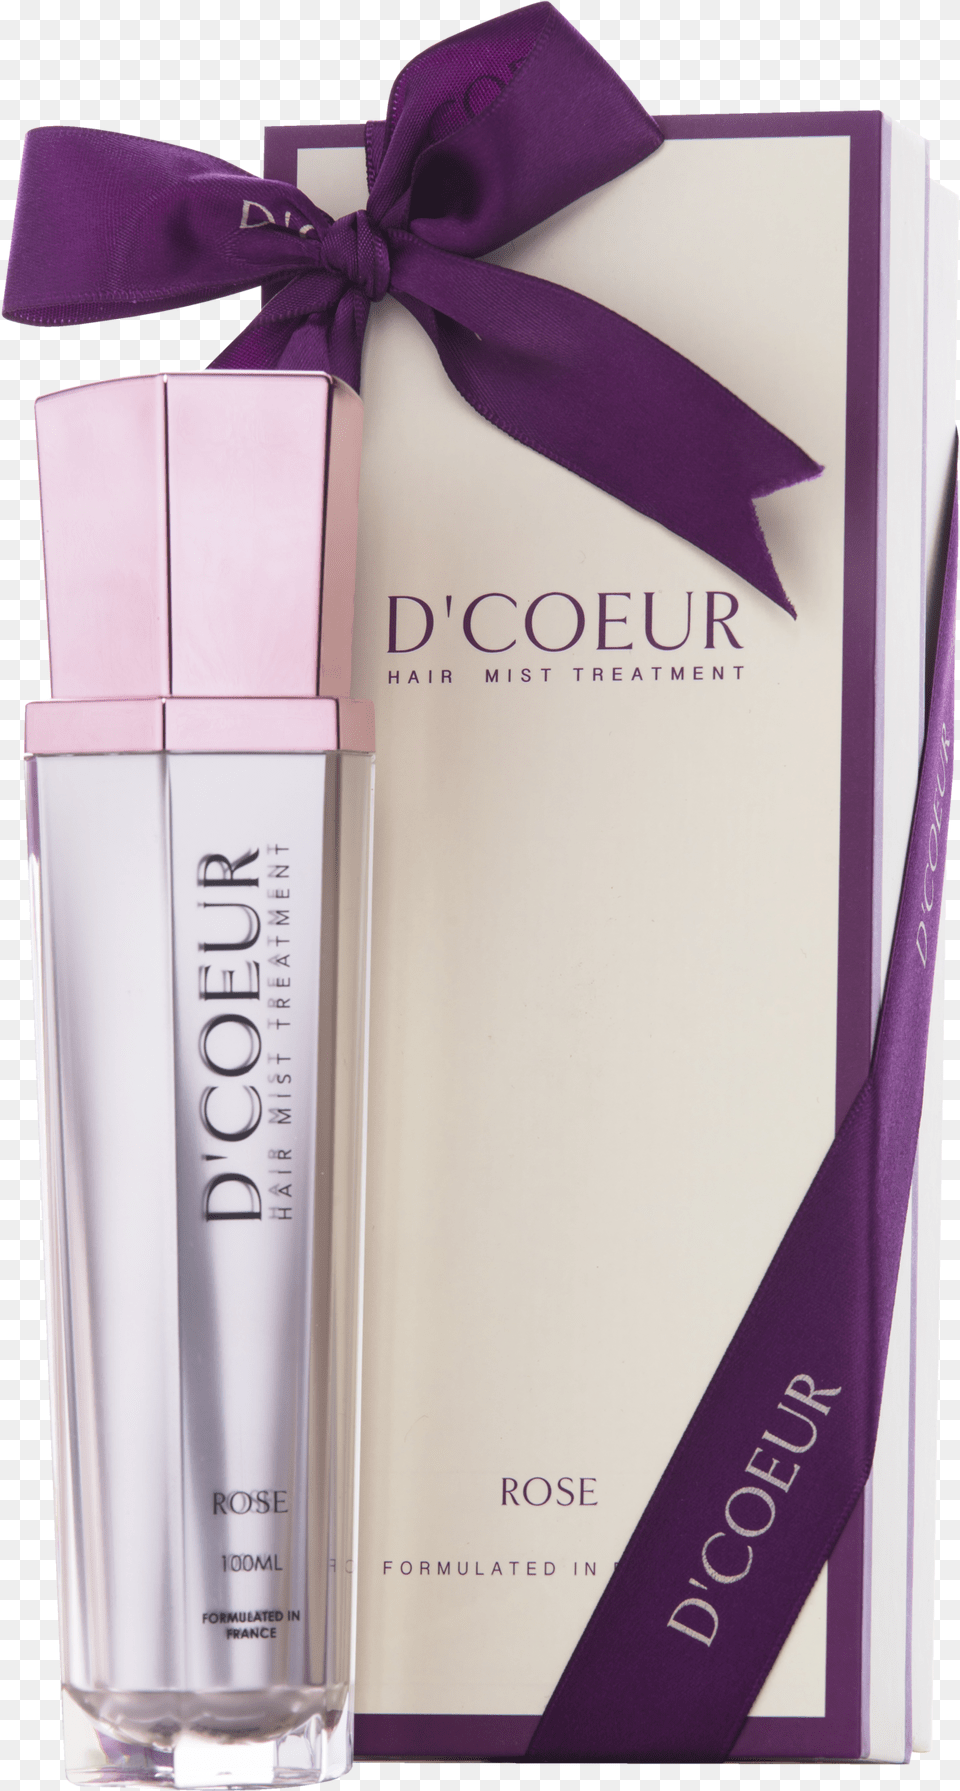 Dcoeur 2 D Coeur Hair Mist, Bottle, Cosmetics, Perfume Free Png Download